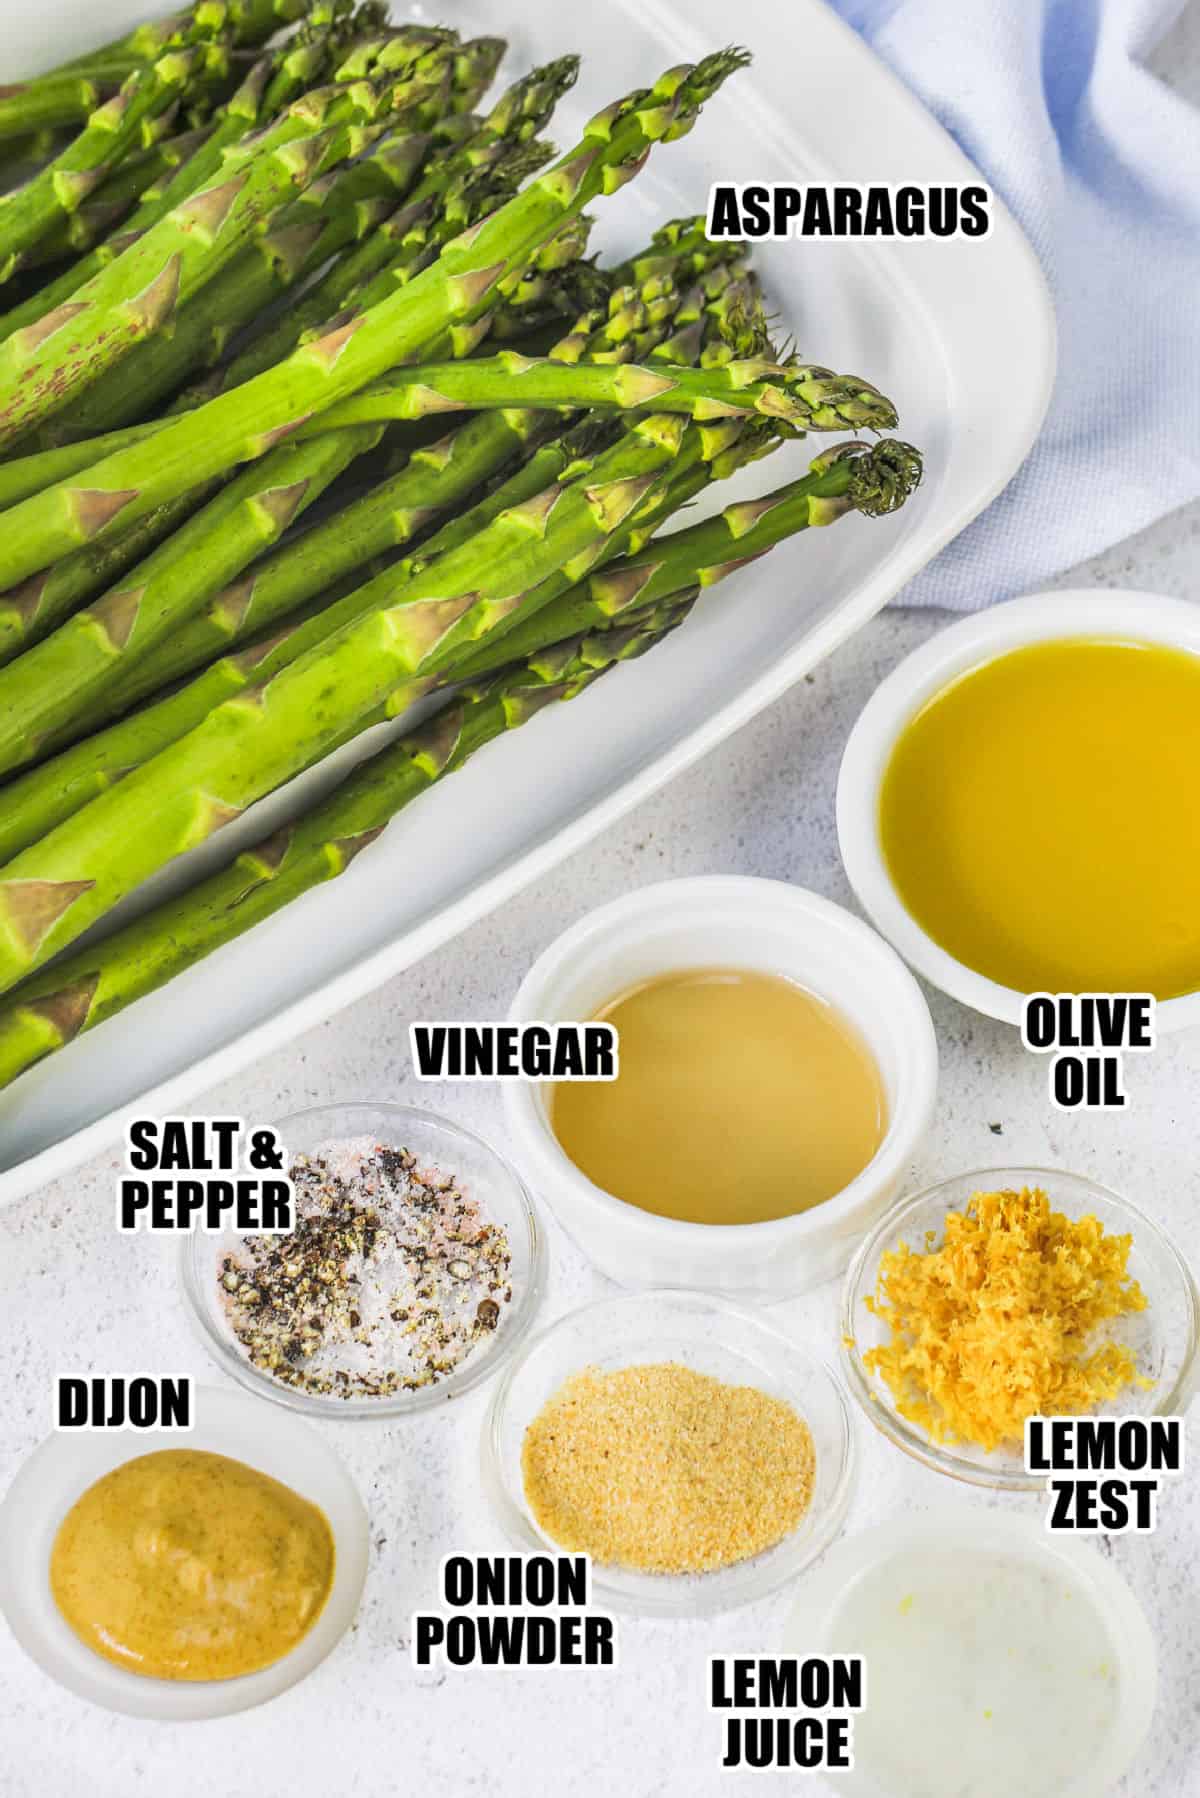 asparagus , lemon zest , lemon juice and other ingredients to make Grilled Asparagus with labels